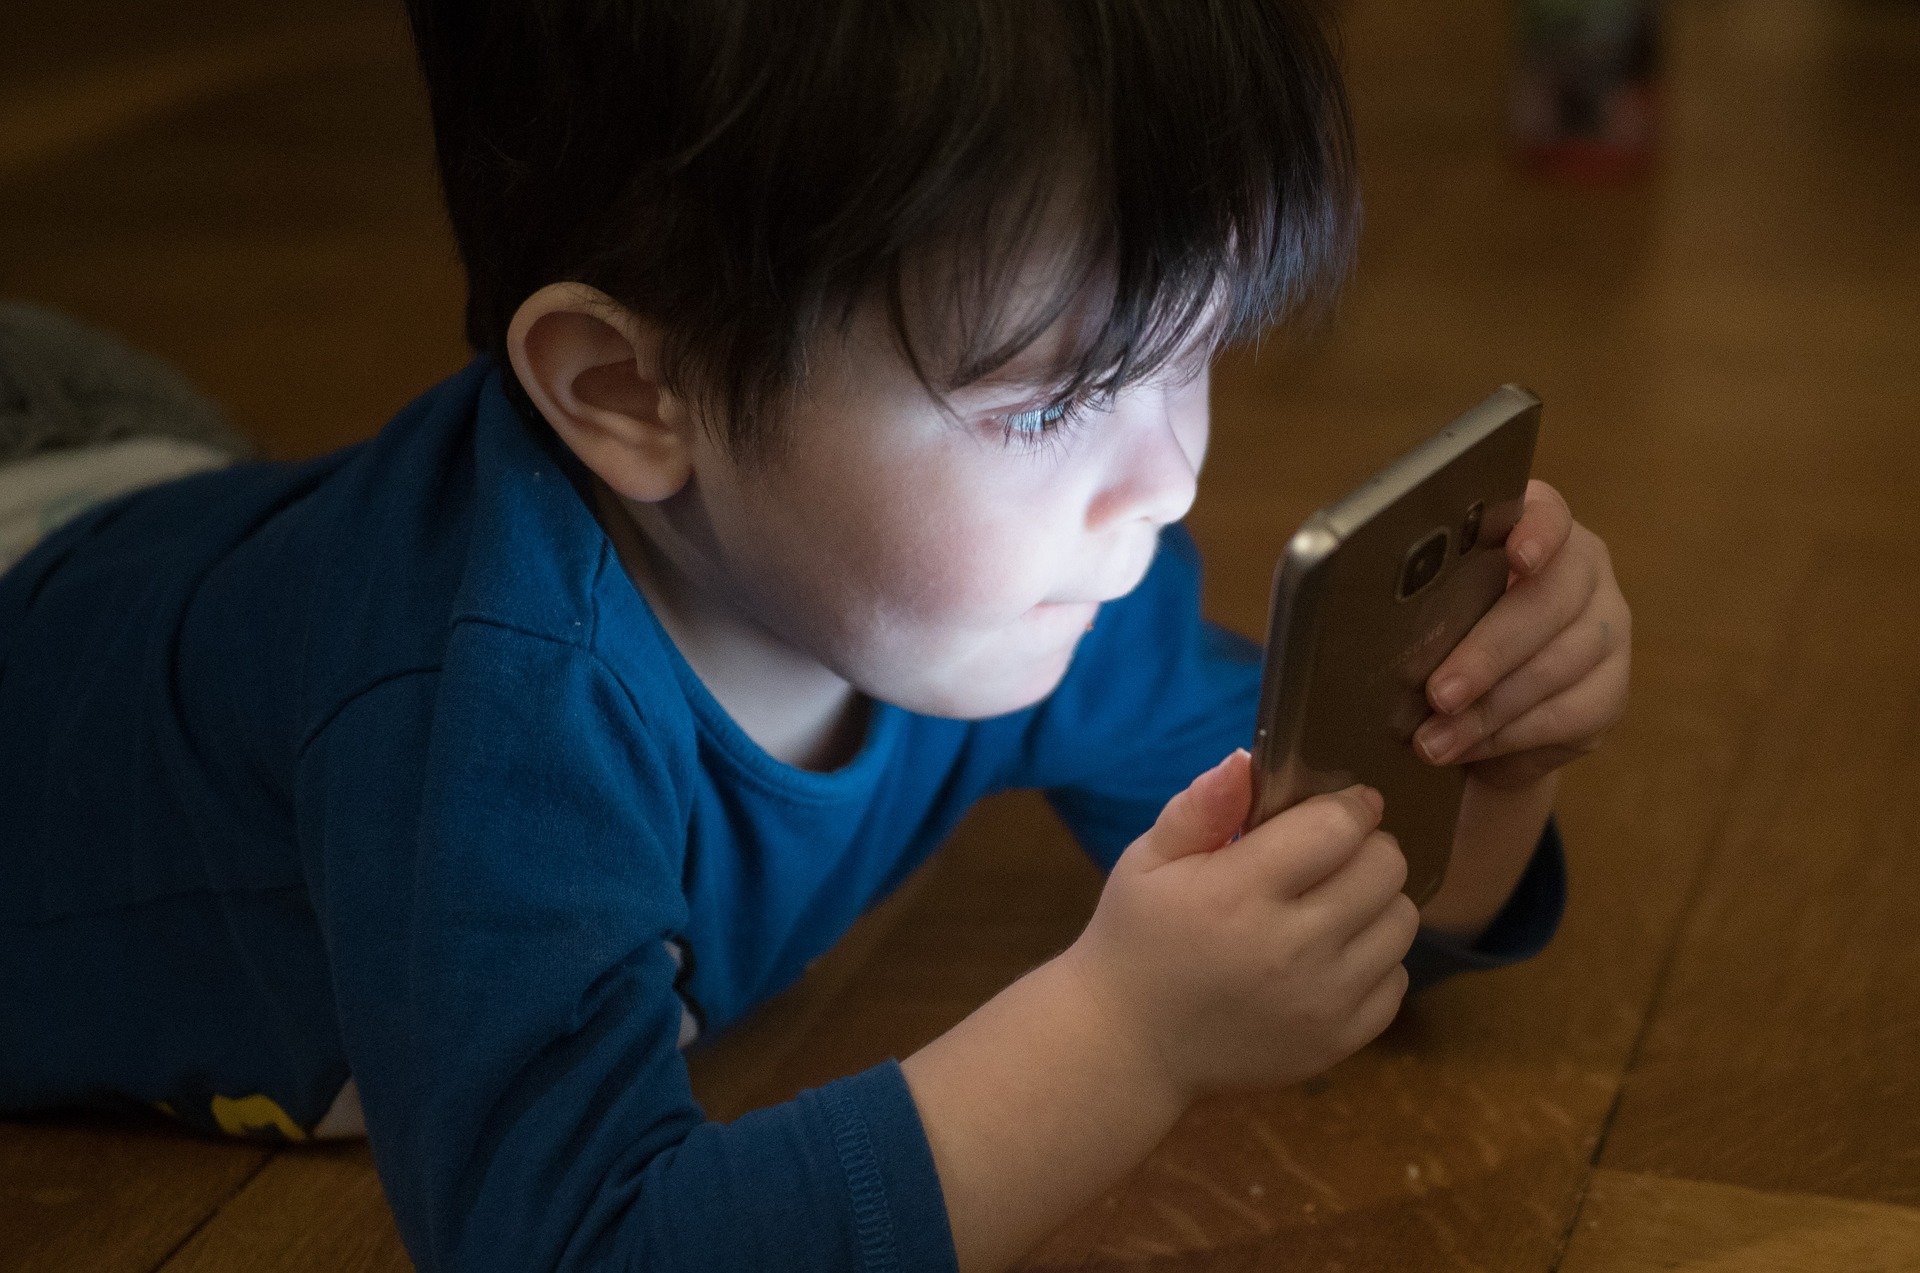 A little boy holding a cellphone. | Source: Pixabay